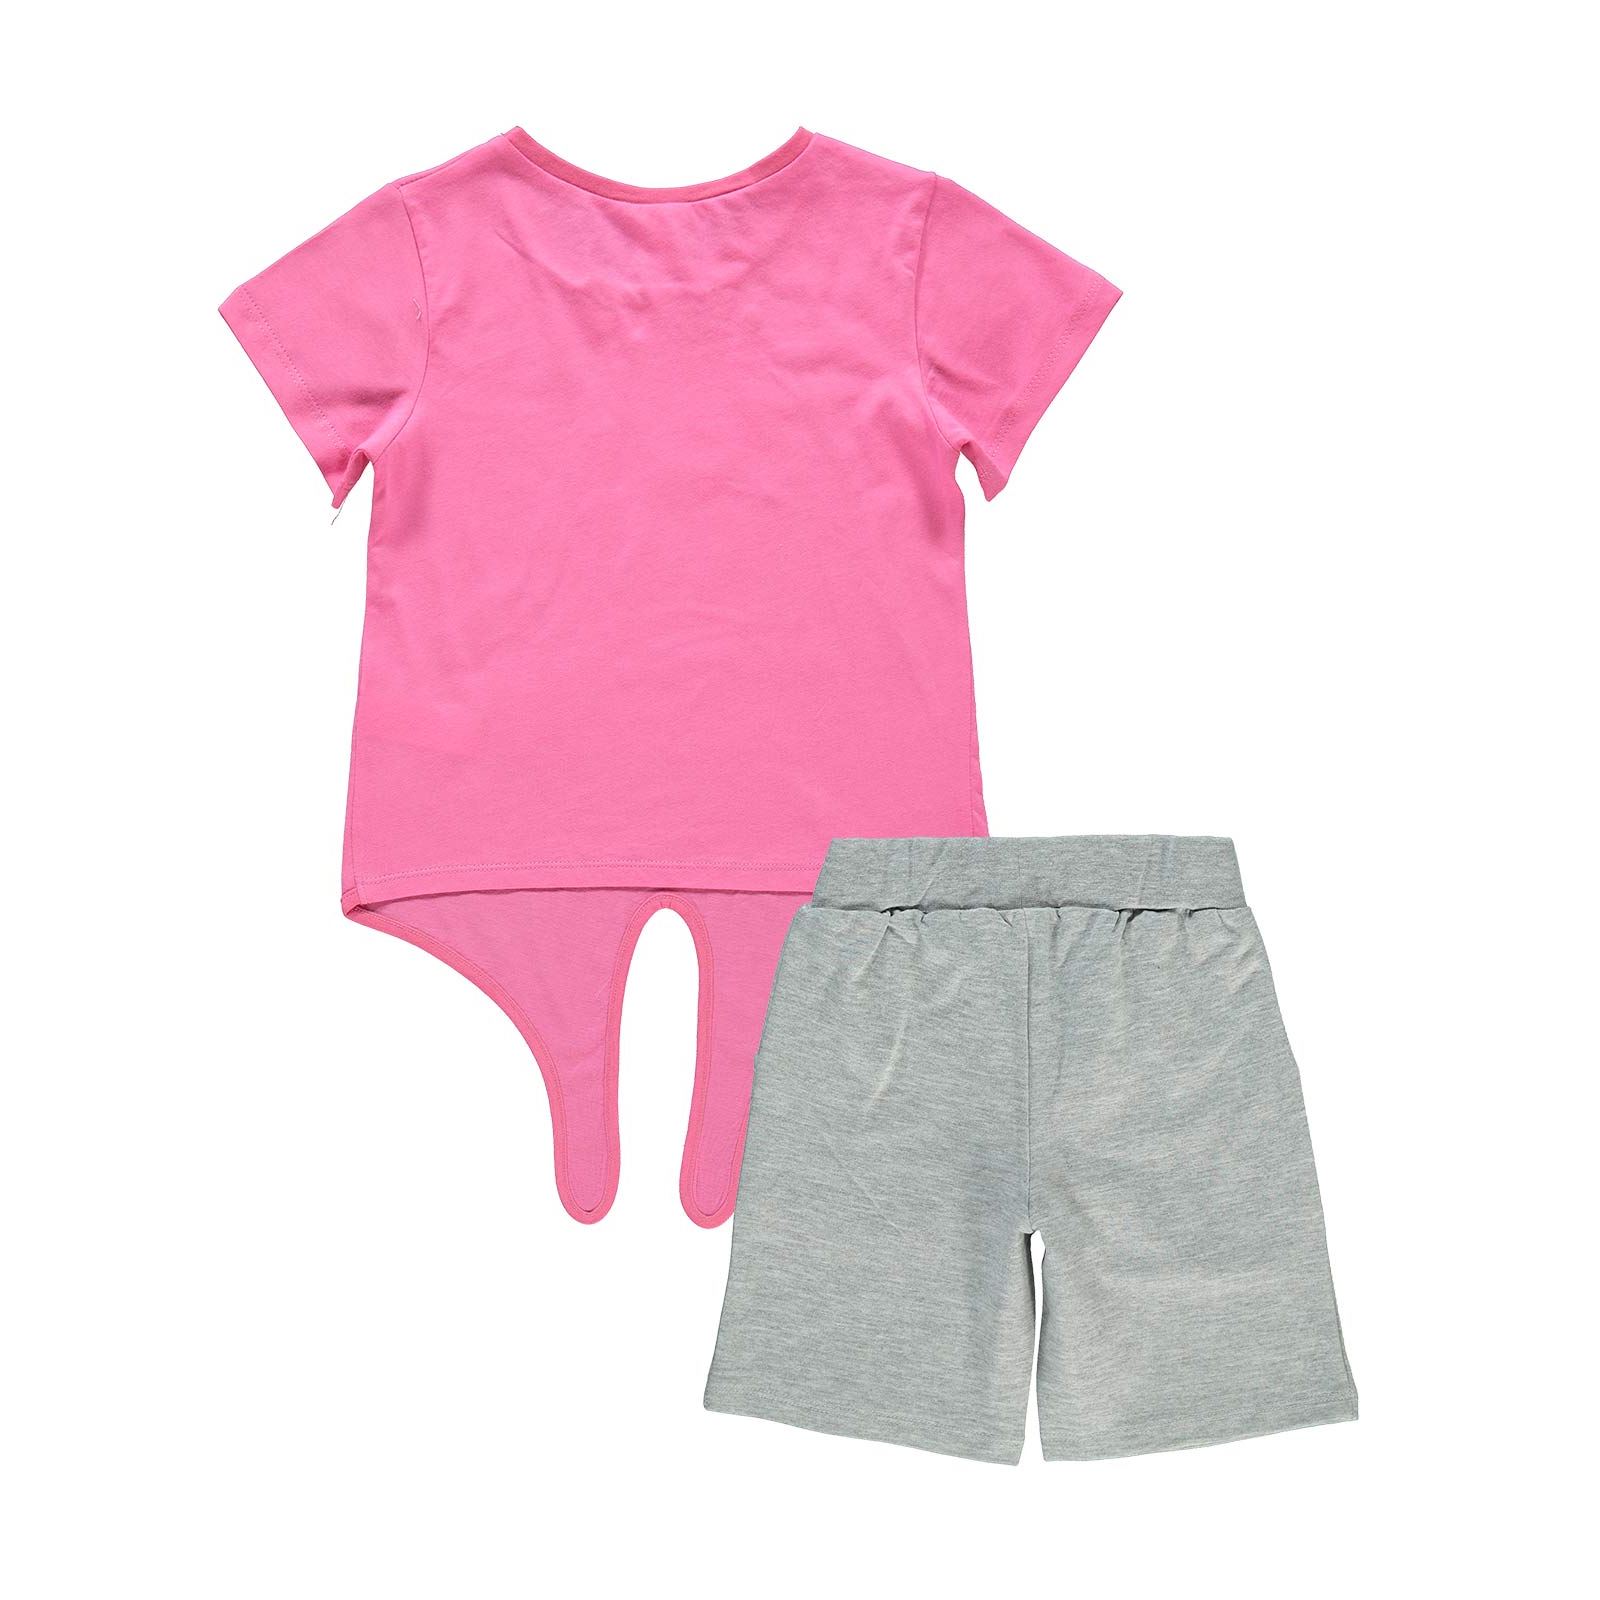 L.O.L Kız Çocuk Pijama Takımı 3-9 Yaş Fuşya